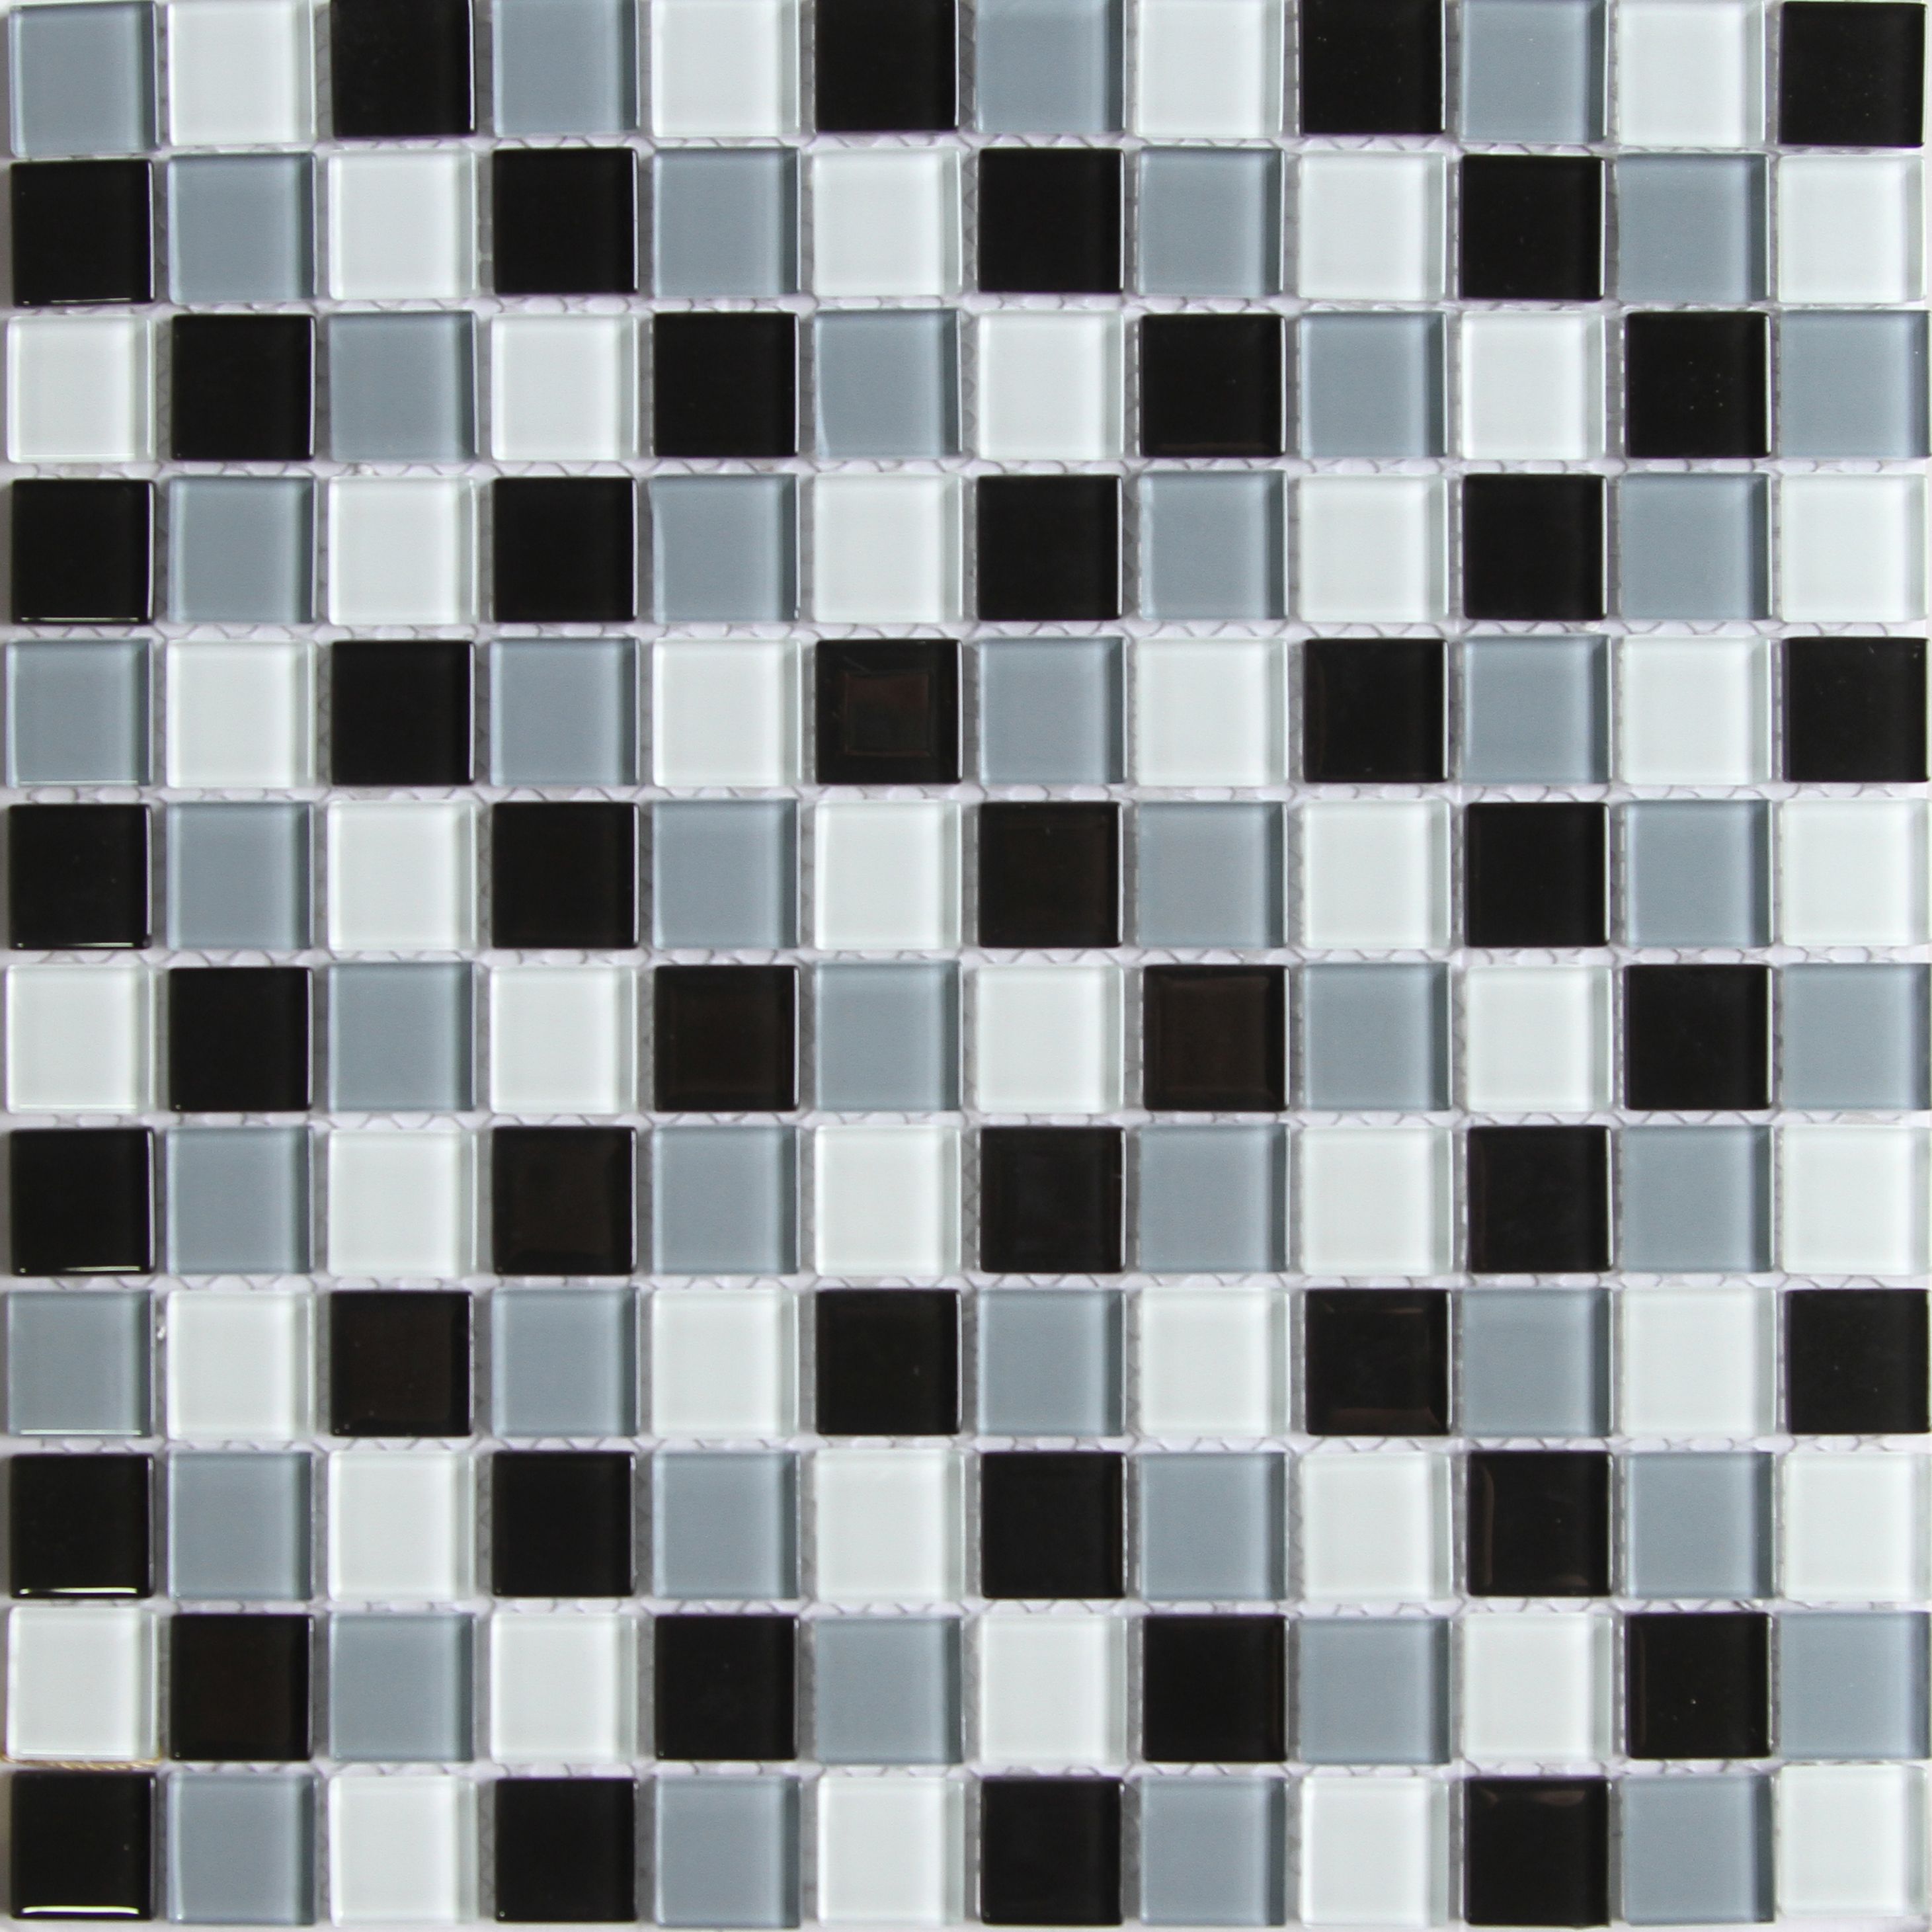 Tarente Black, grey & white Gloss Glass effect Mosaic Glass Mosaic tile, (L)300mm (W)300mm